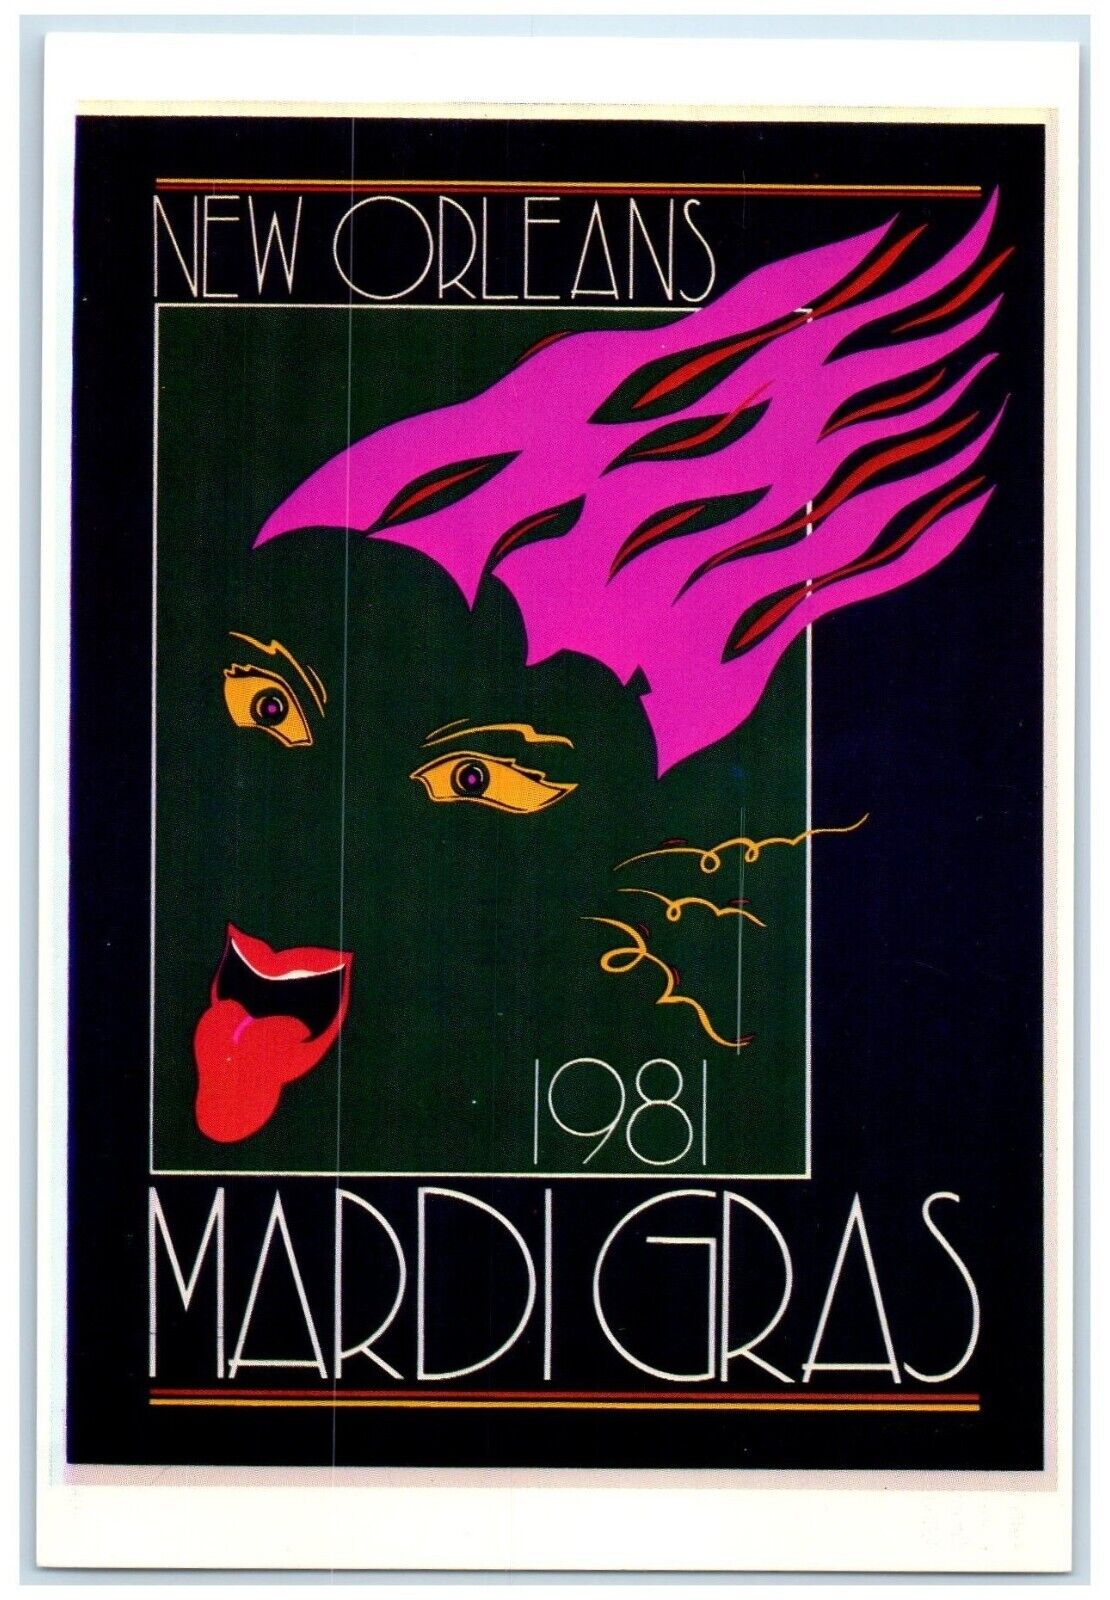 New Orleans Louisiana LA Postcard Mardi Gras Poster 1981 Fourth By K. N. Martin